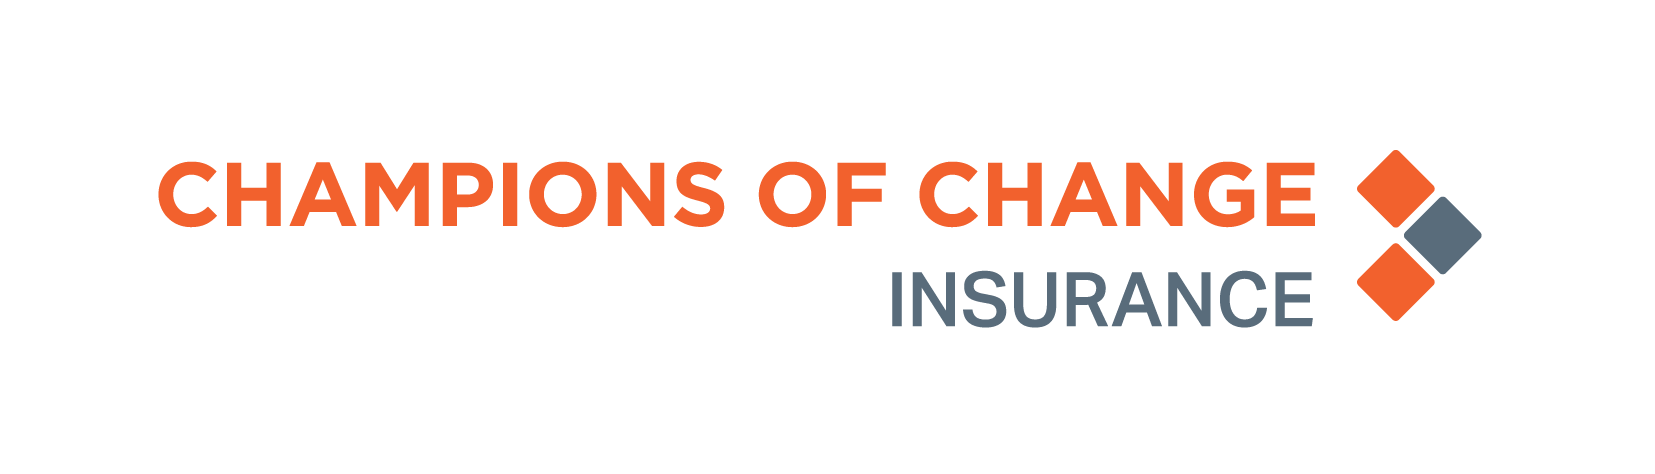 Champions of Change Insurance Group Logo